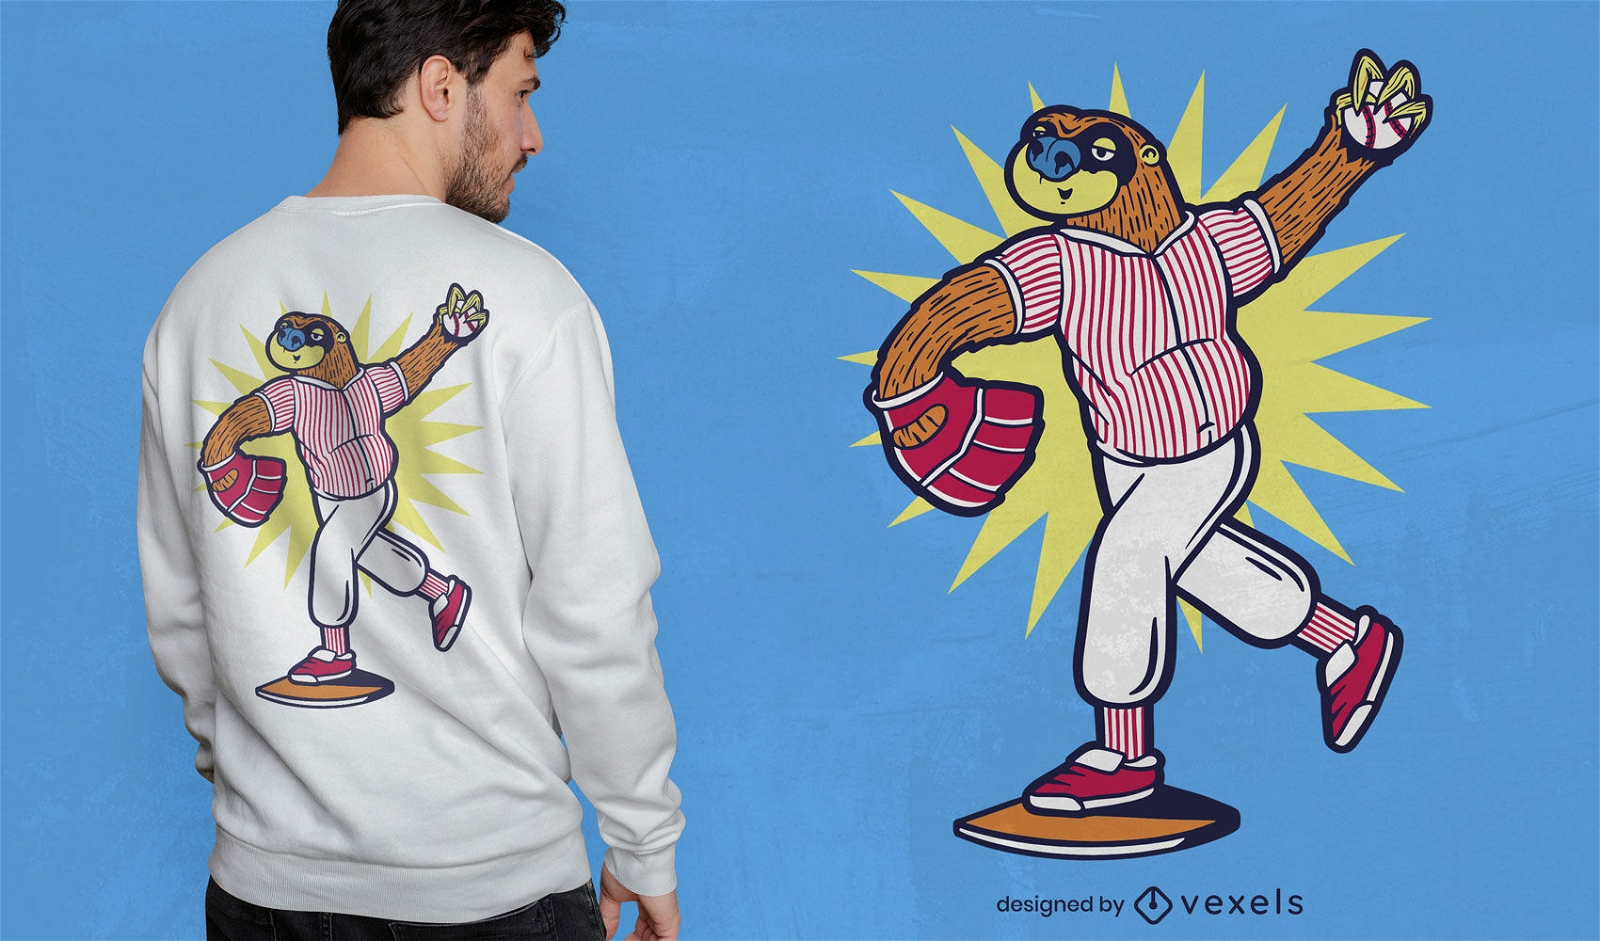 Baseball sloth character t-shirt design